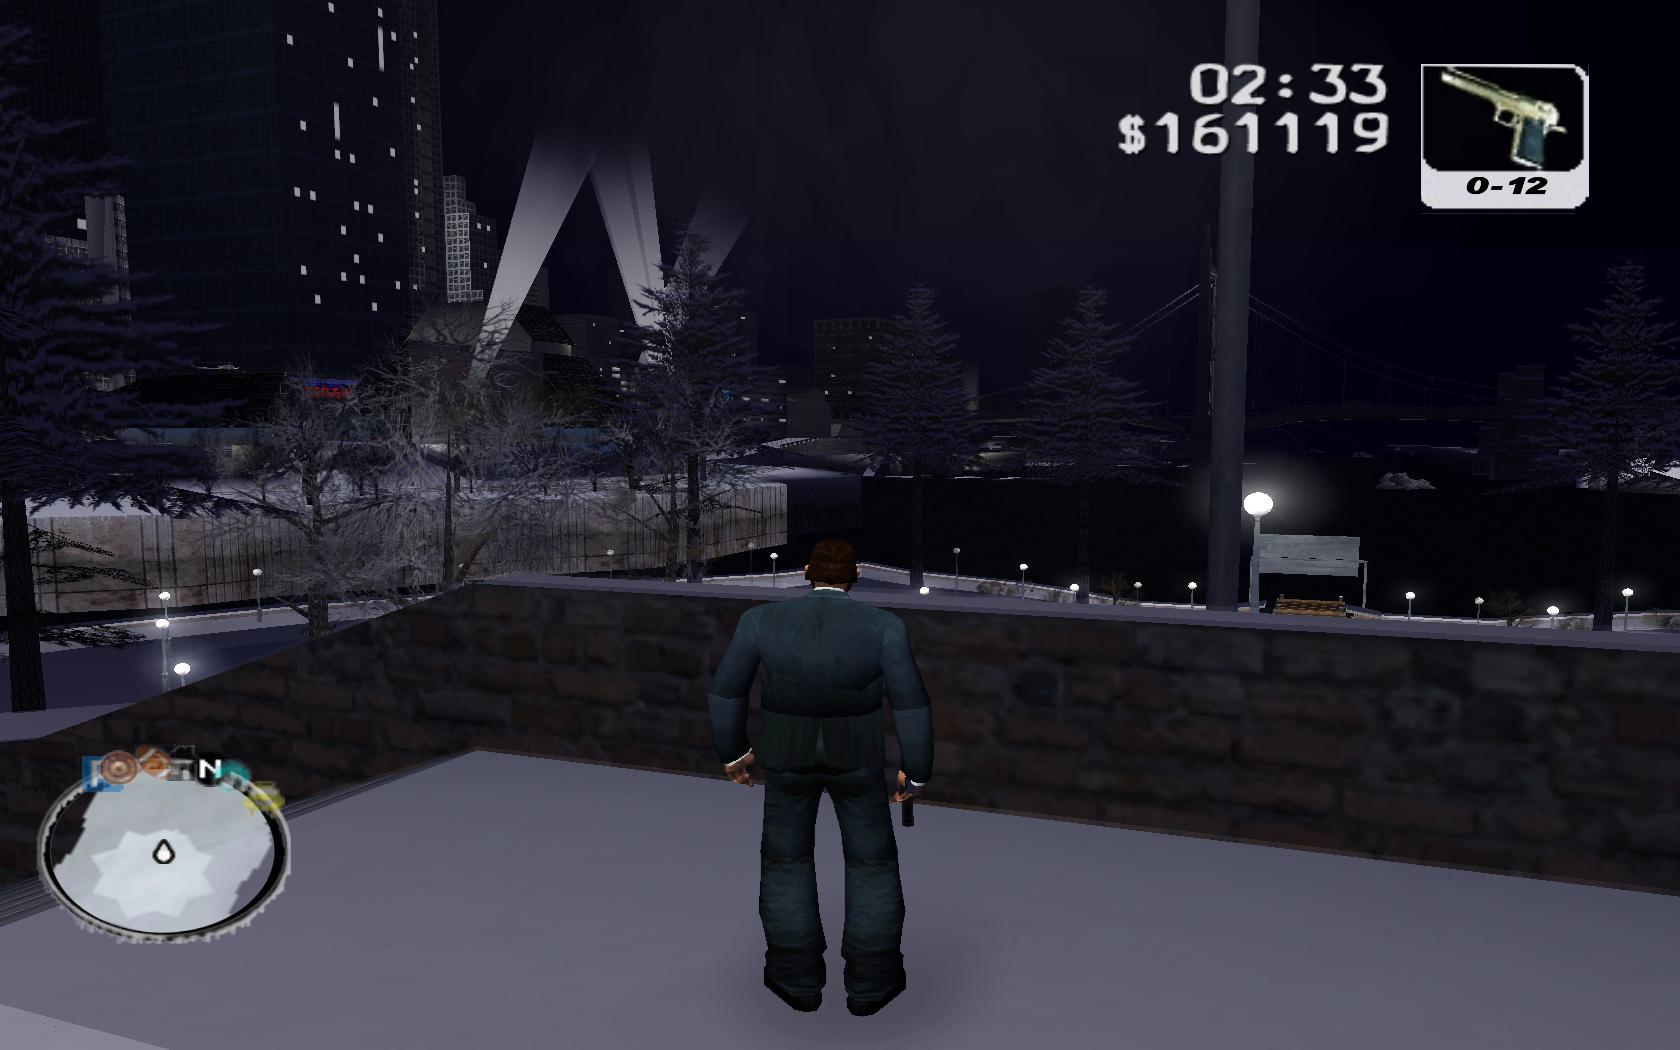 GTA 3 Snow City Mobile file - ModDB